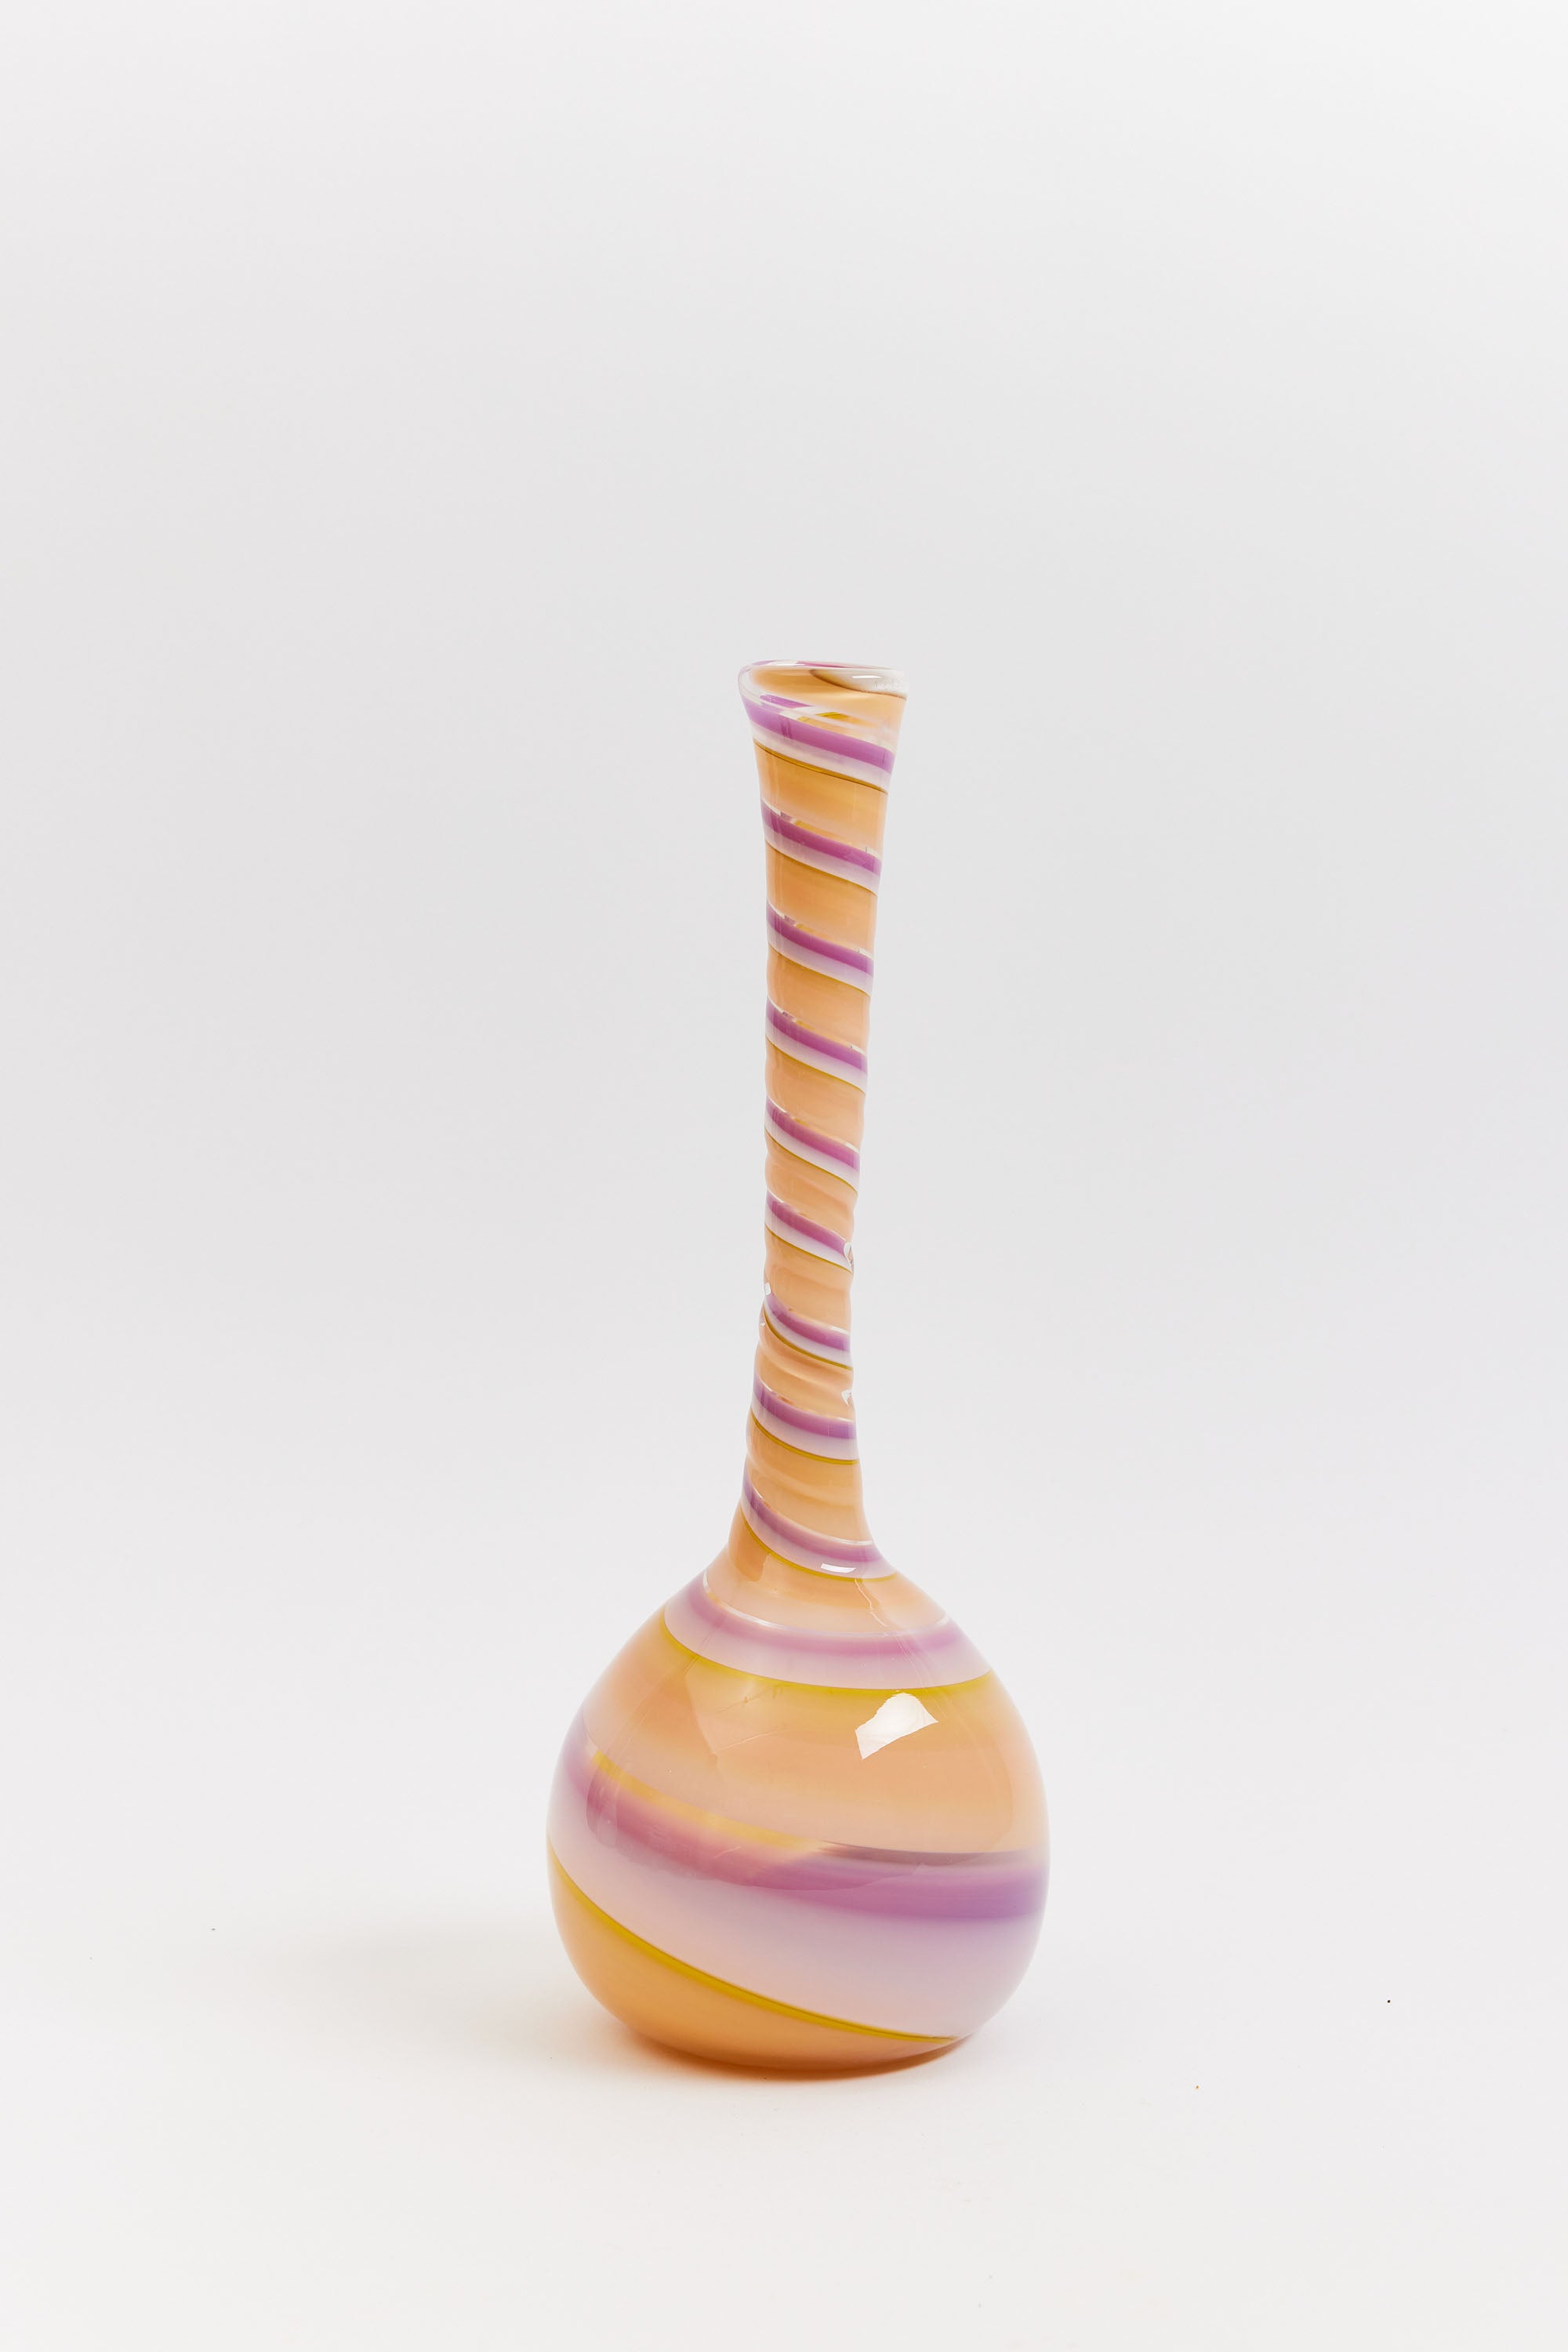 Michael Anchin Narrow Long-Neck, Cream/Purple Marble Vase